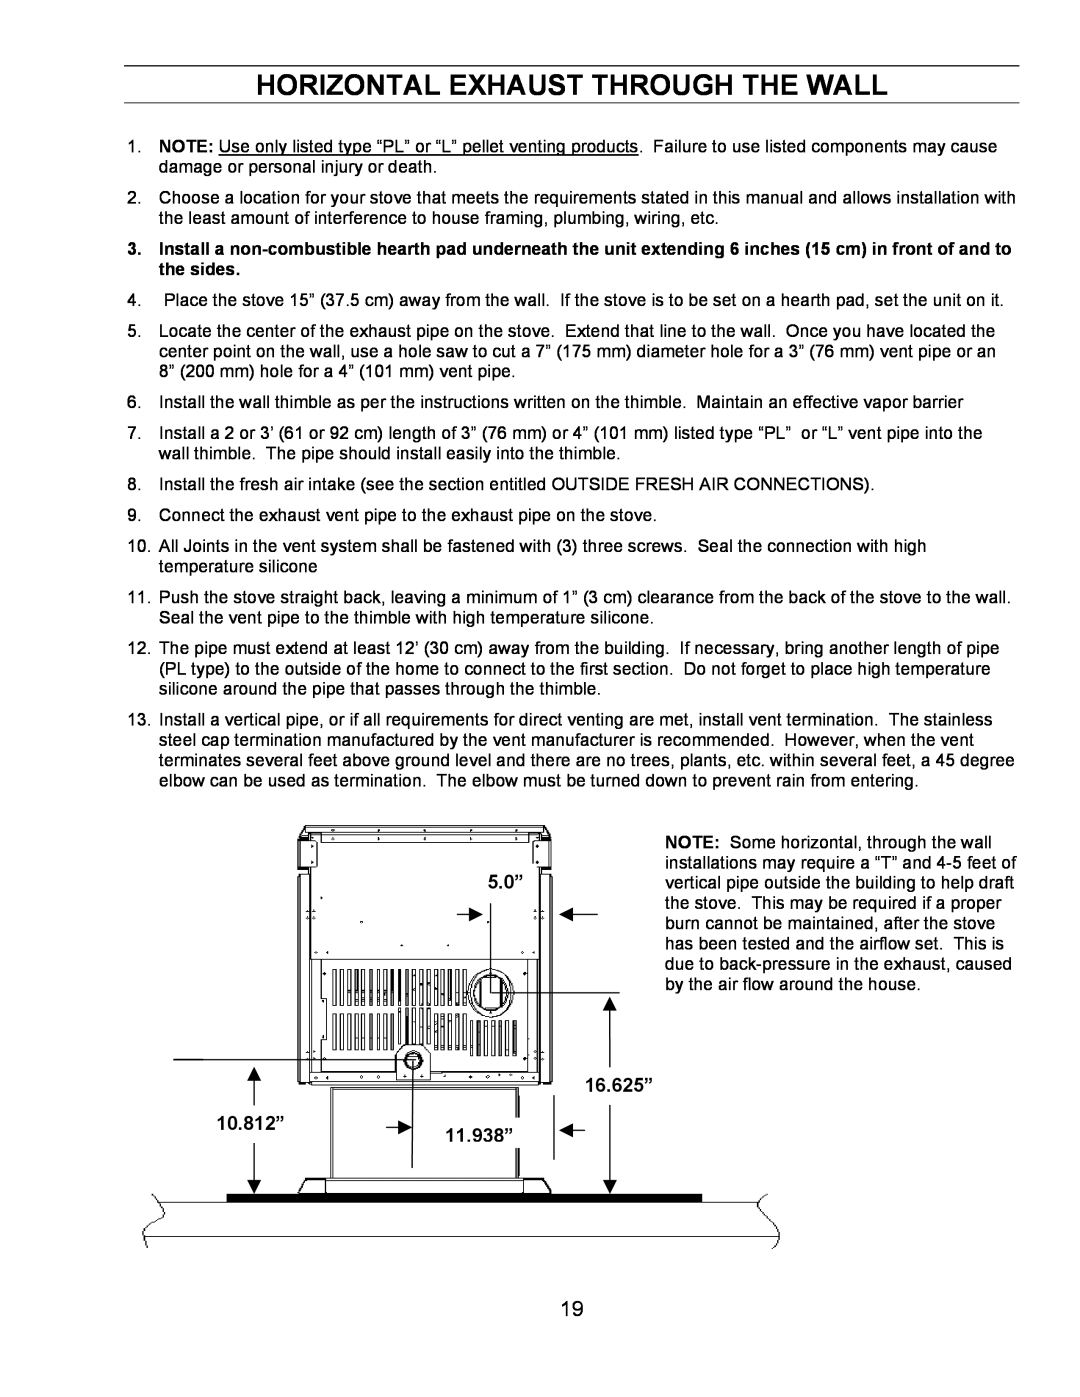 Sherwood EF-3 BAYI technical manual Horizontal Exhaust Through The Wall, 16.625” 10.812”11.938” 